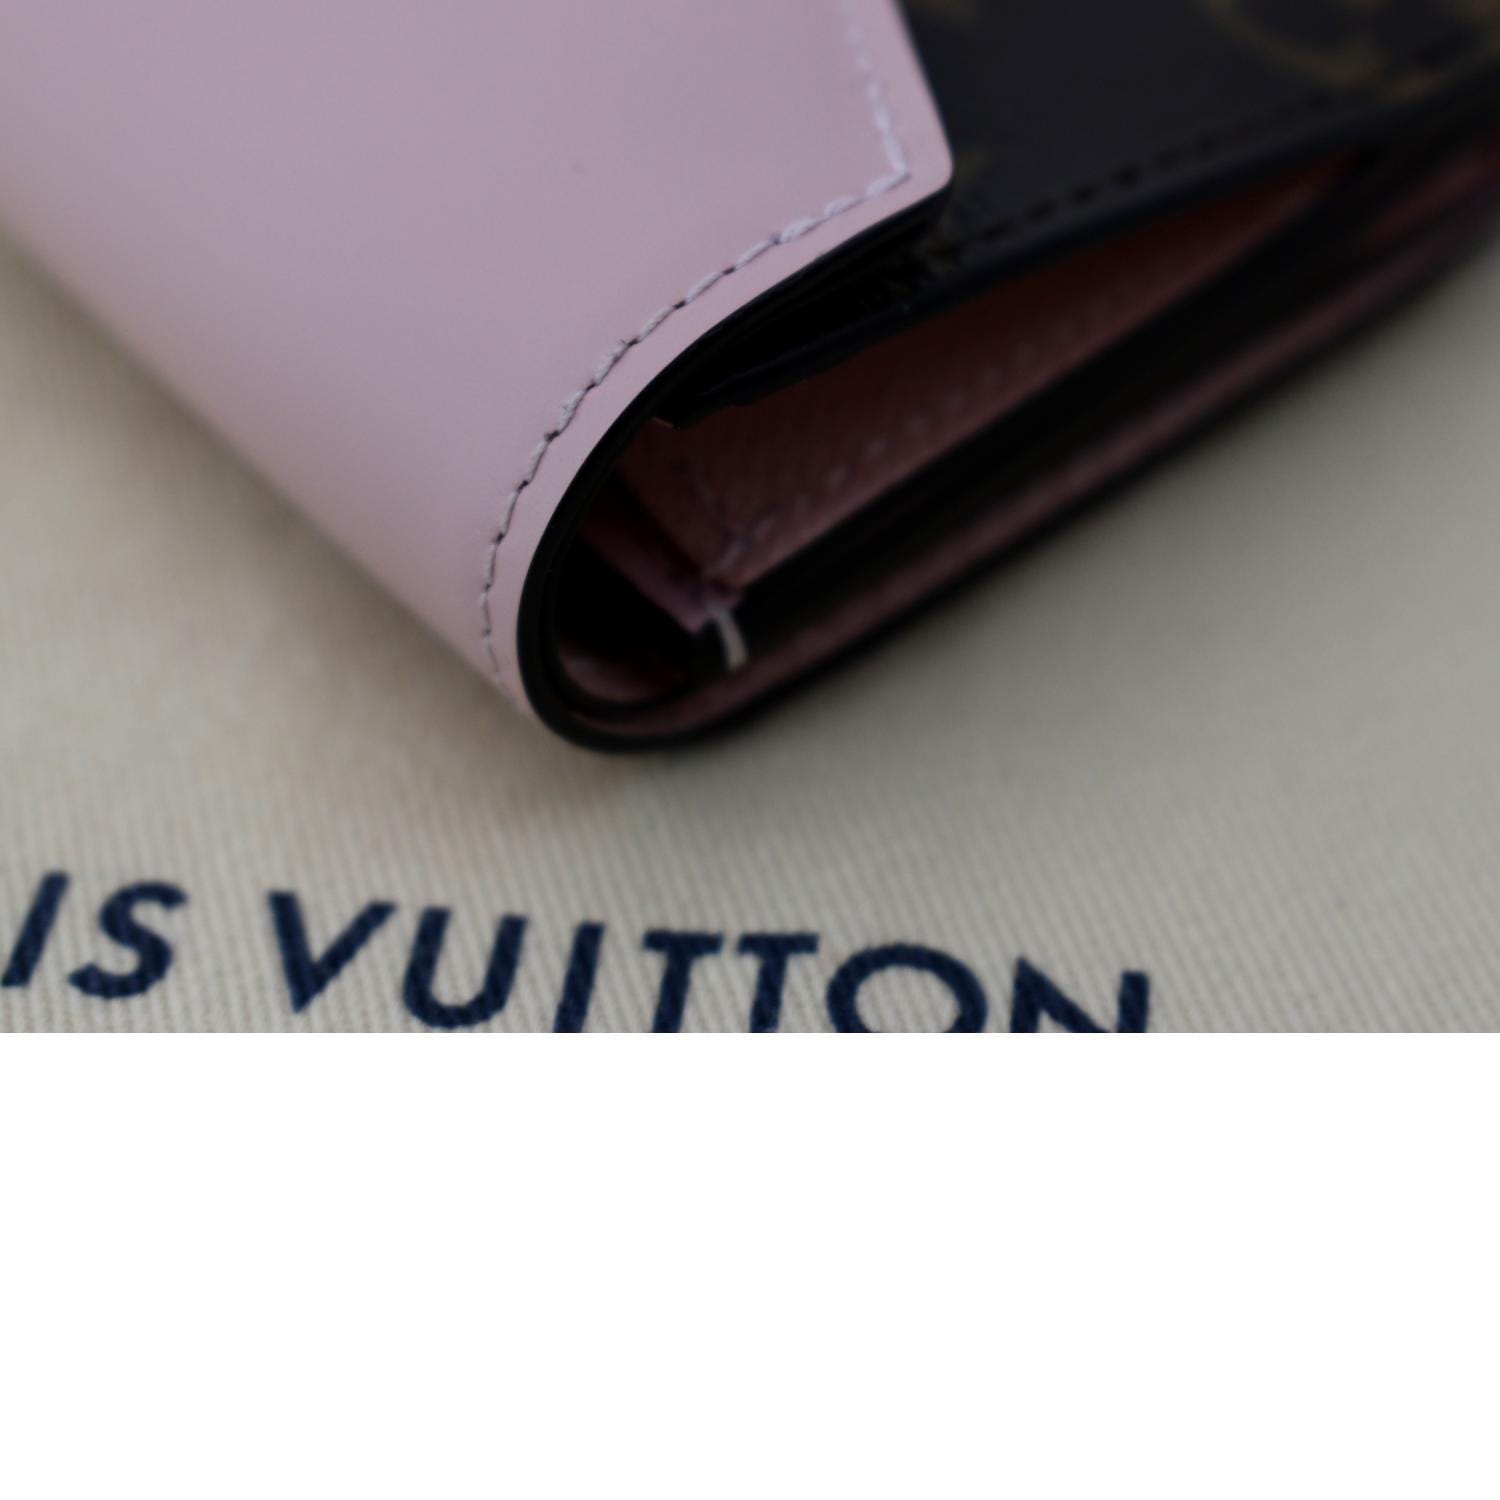 Louis Vuitton, Bags, Louis Vuitton Zoe Wallet In Rose Ballerine Made In  France